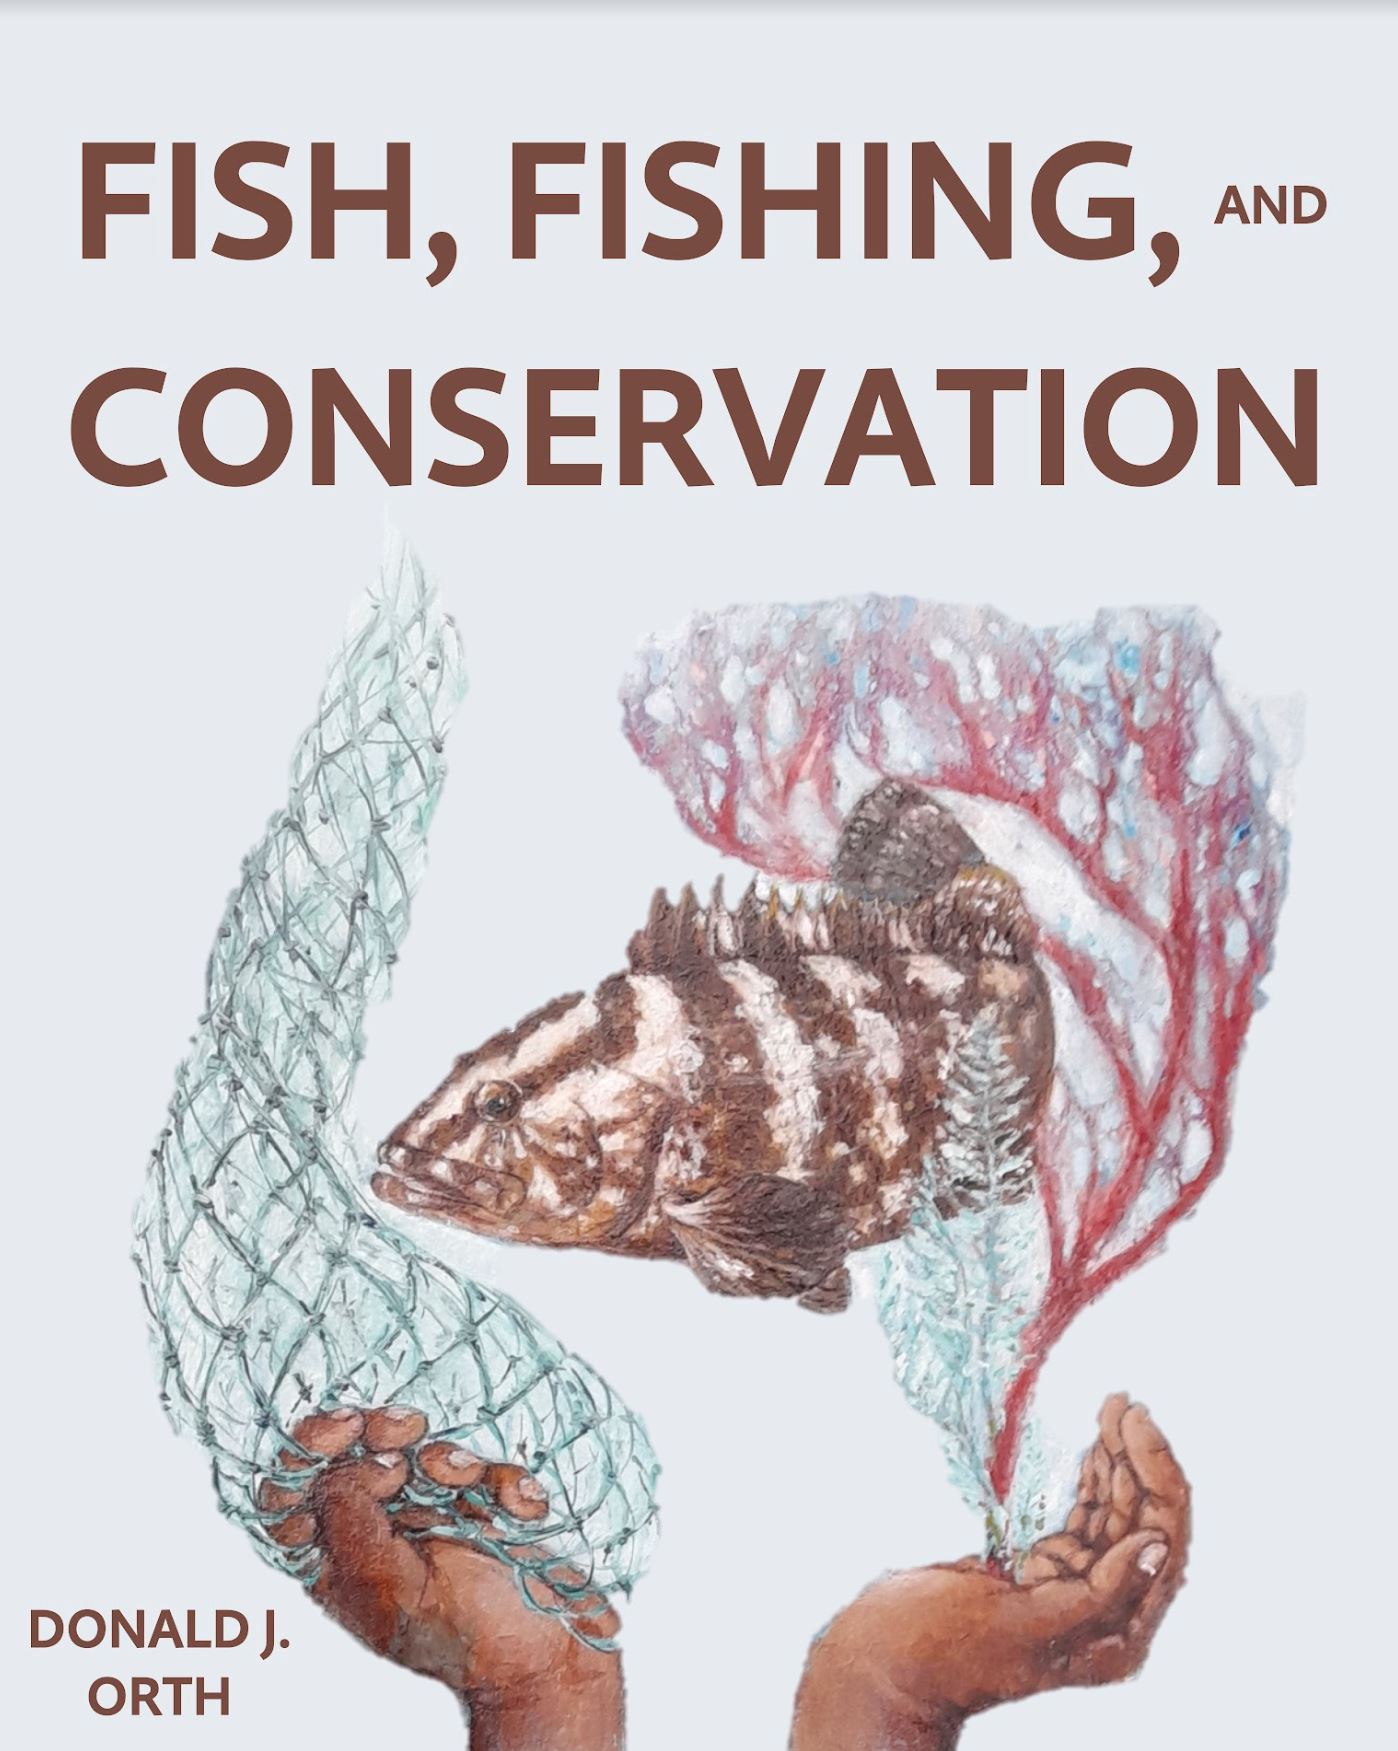 Fish & Wildlife Library  Vermont Fish & Wildlife Department